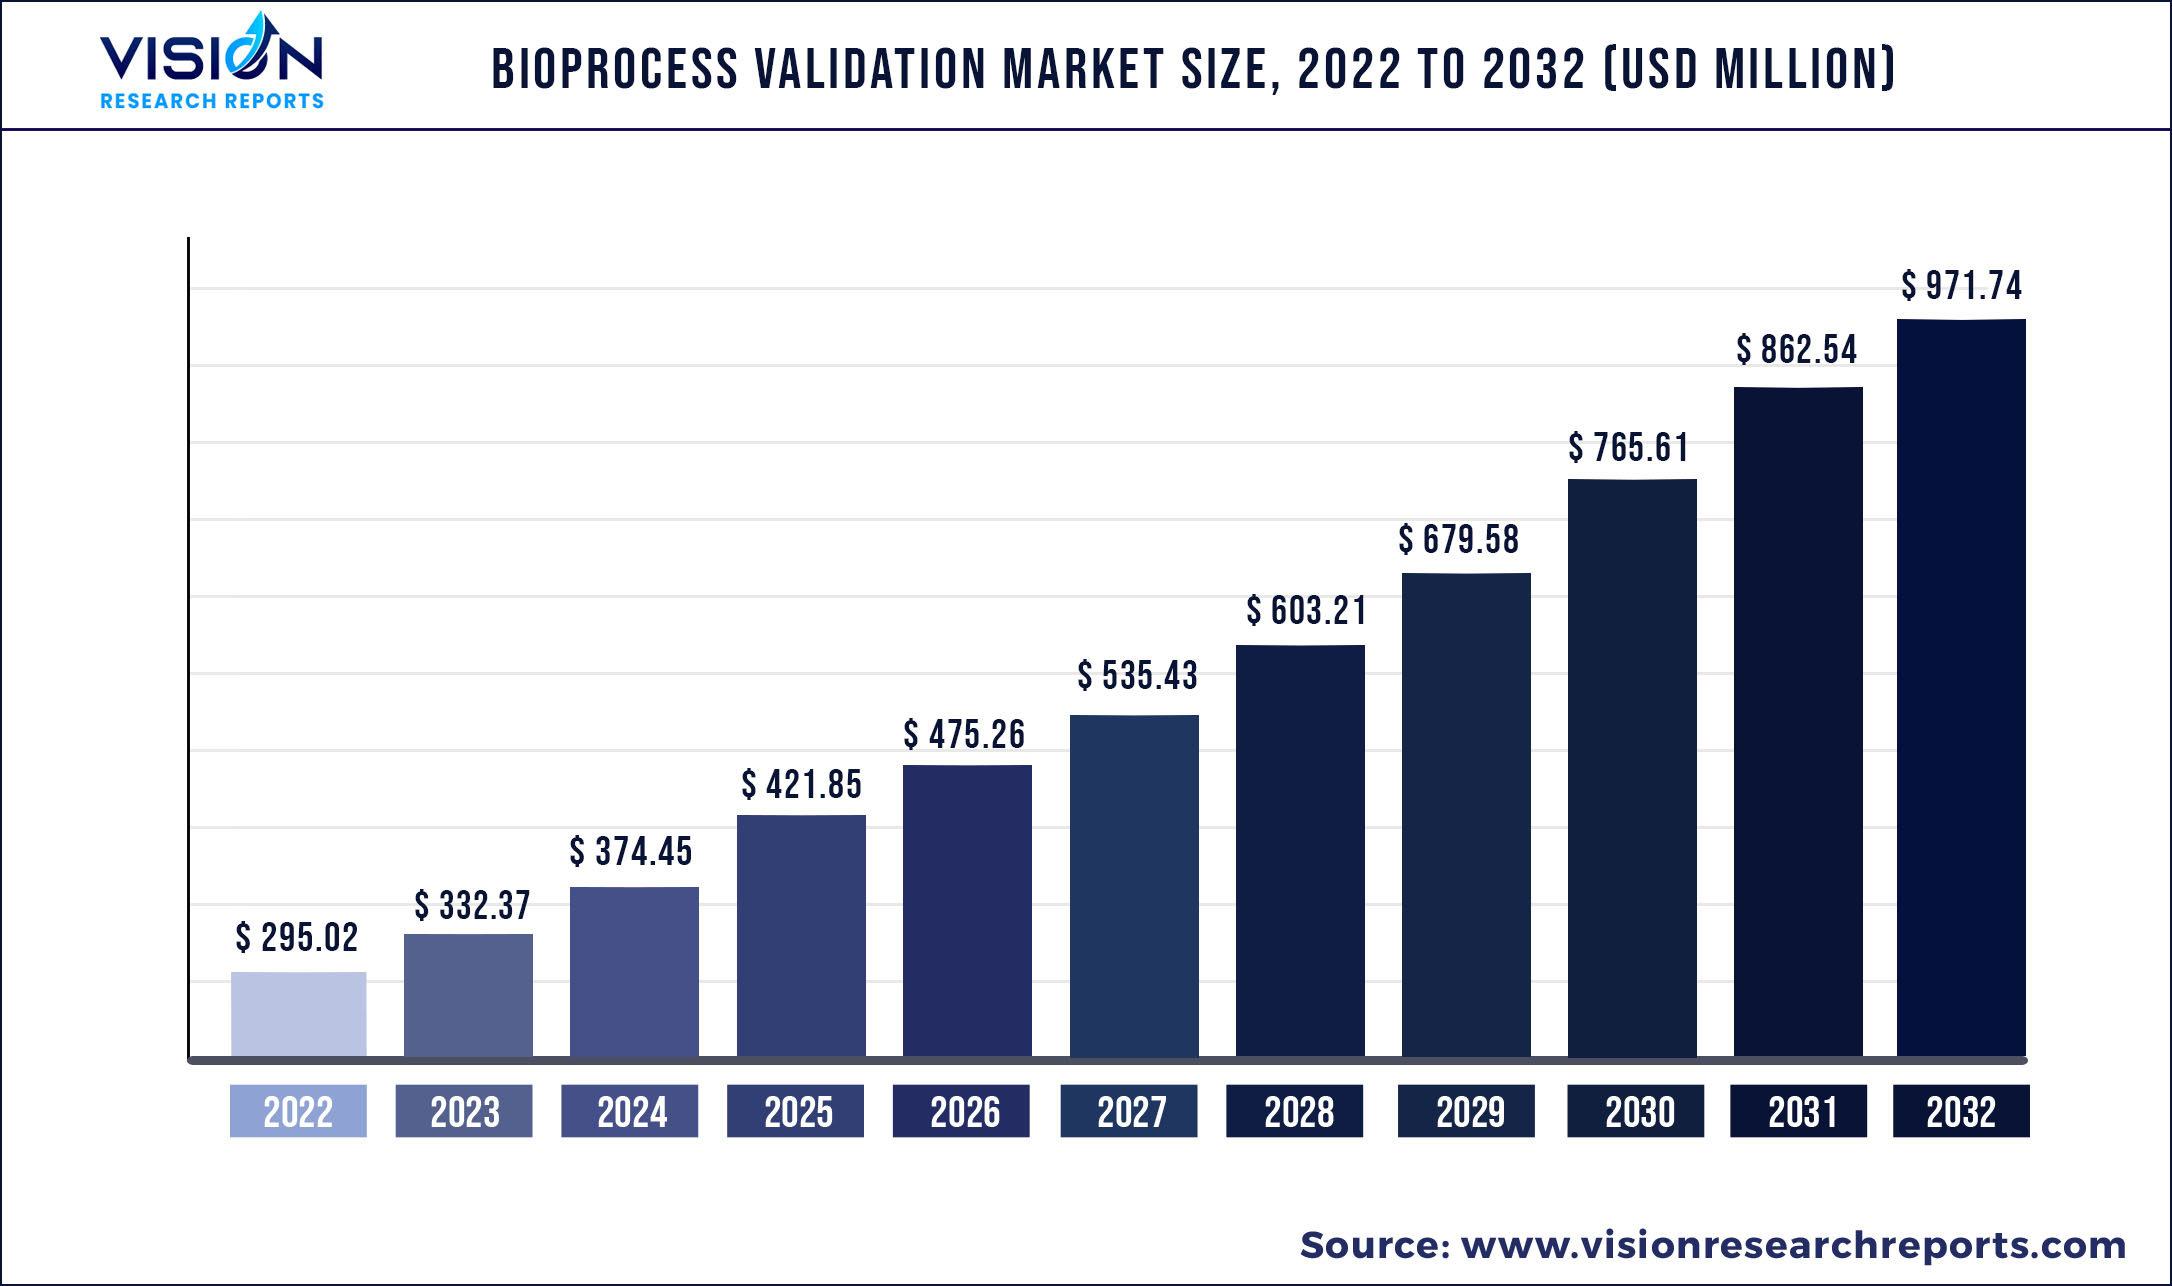 Bioprocess Validation Market Size 2022 to 2032